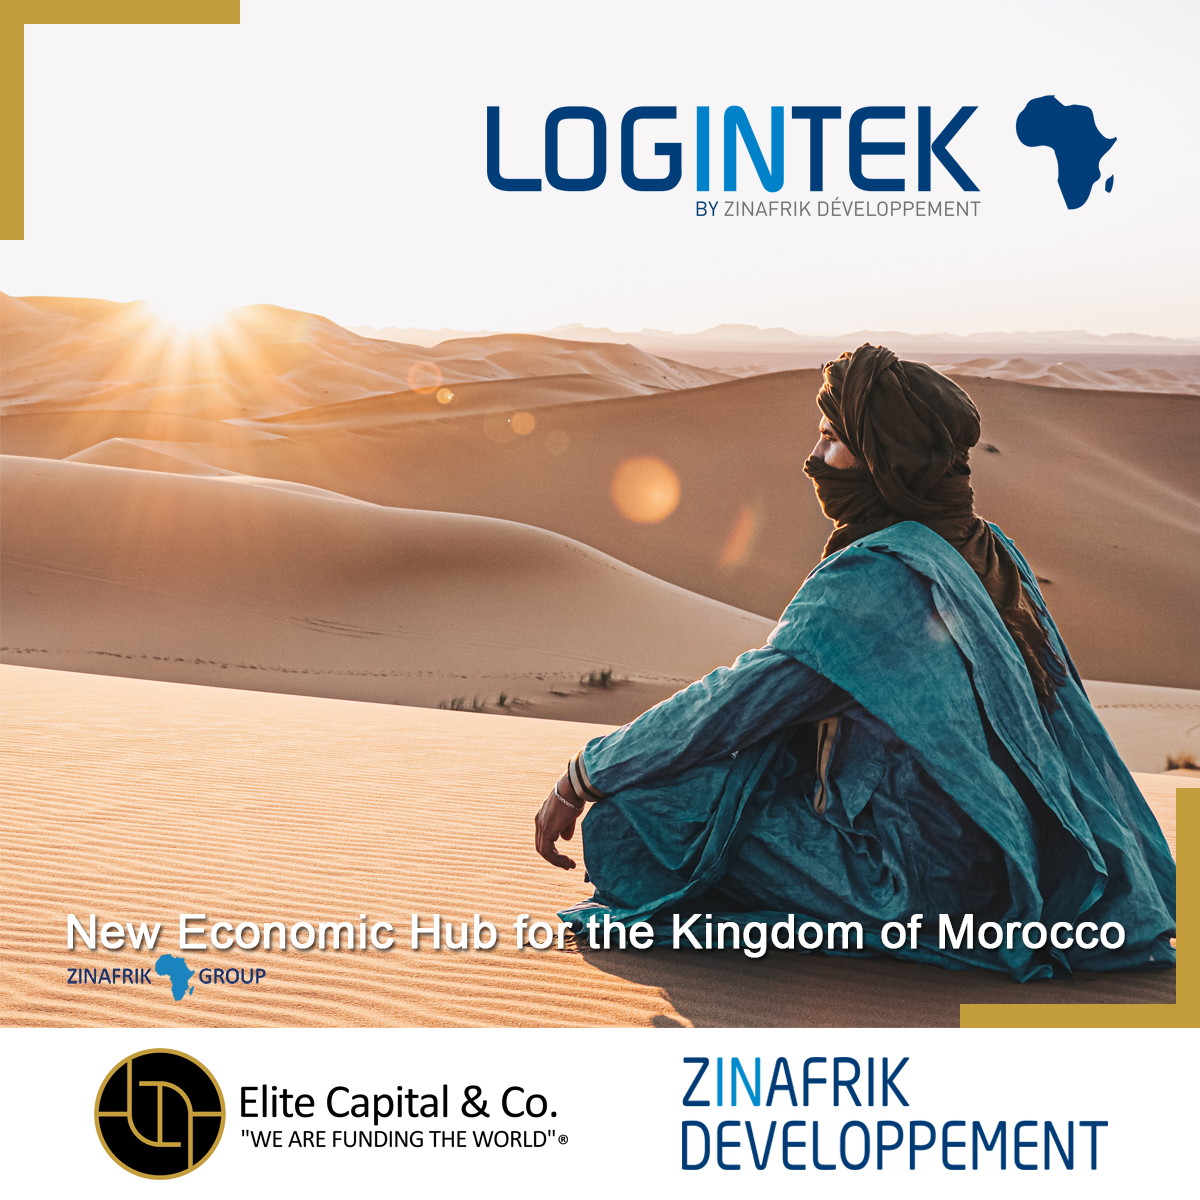 LOGINTEK -  New Economic Hub for the Kingdom of Morocco